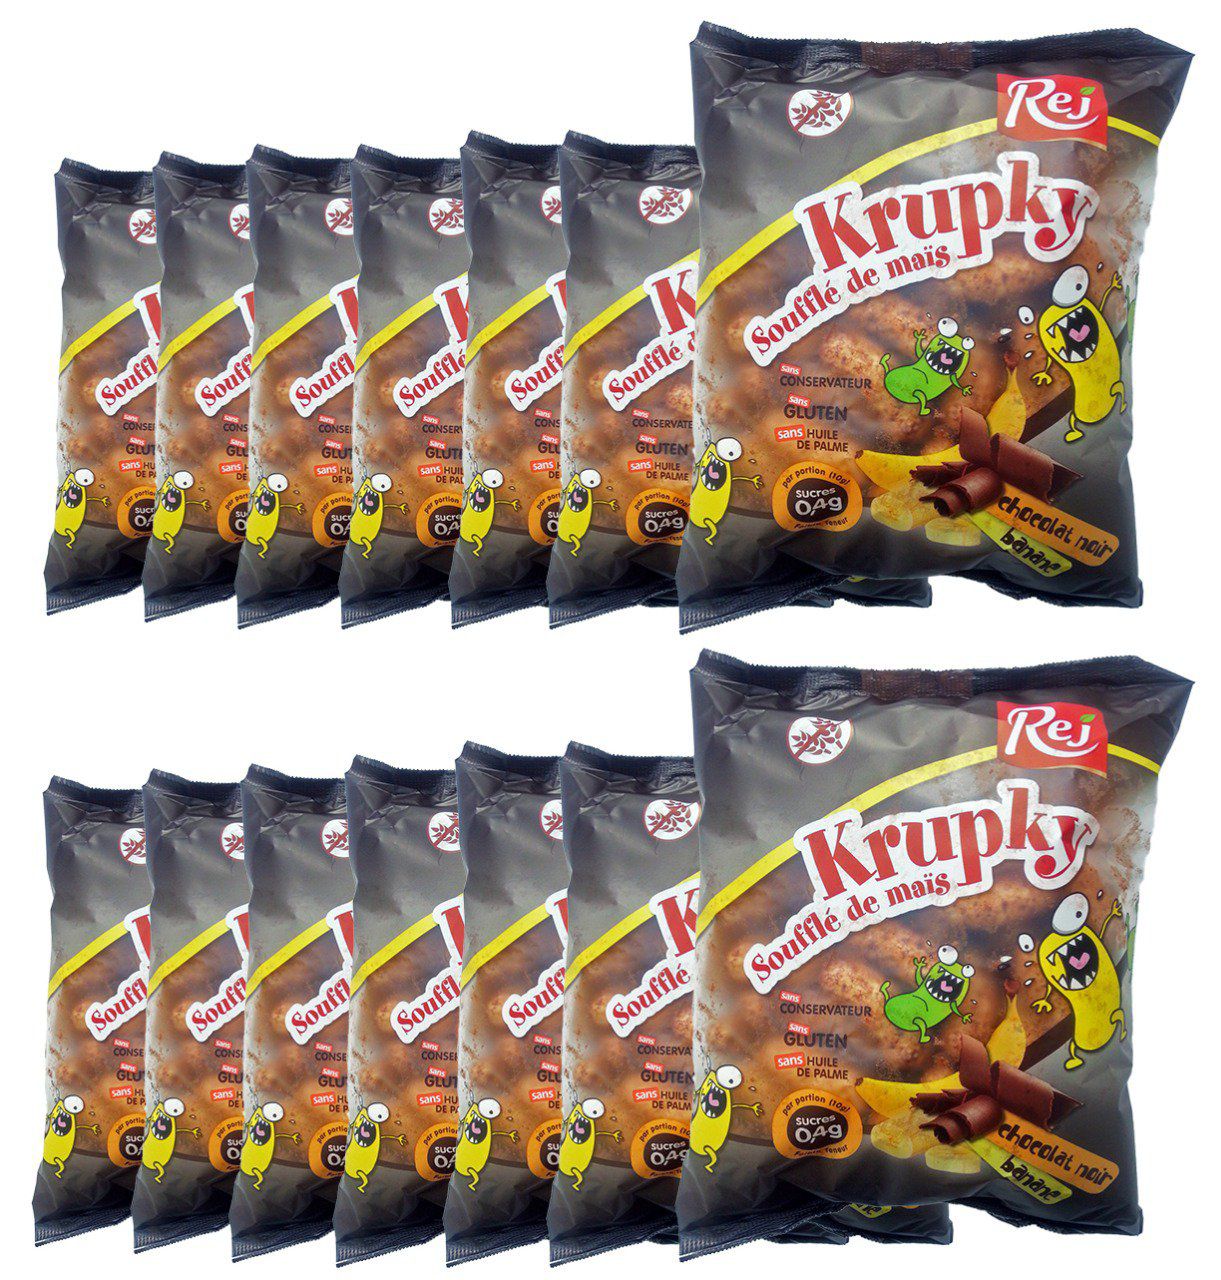 KRUPKY soufflé de maïs chocolat noir / banane - Pack de 24 sachets